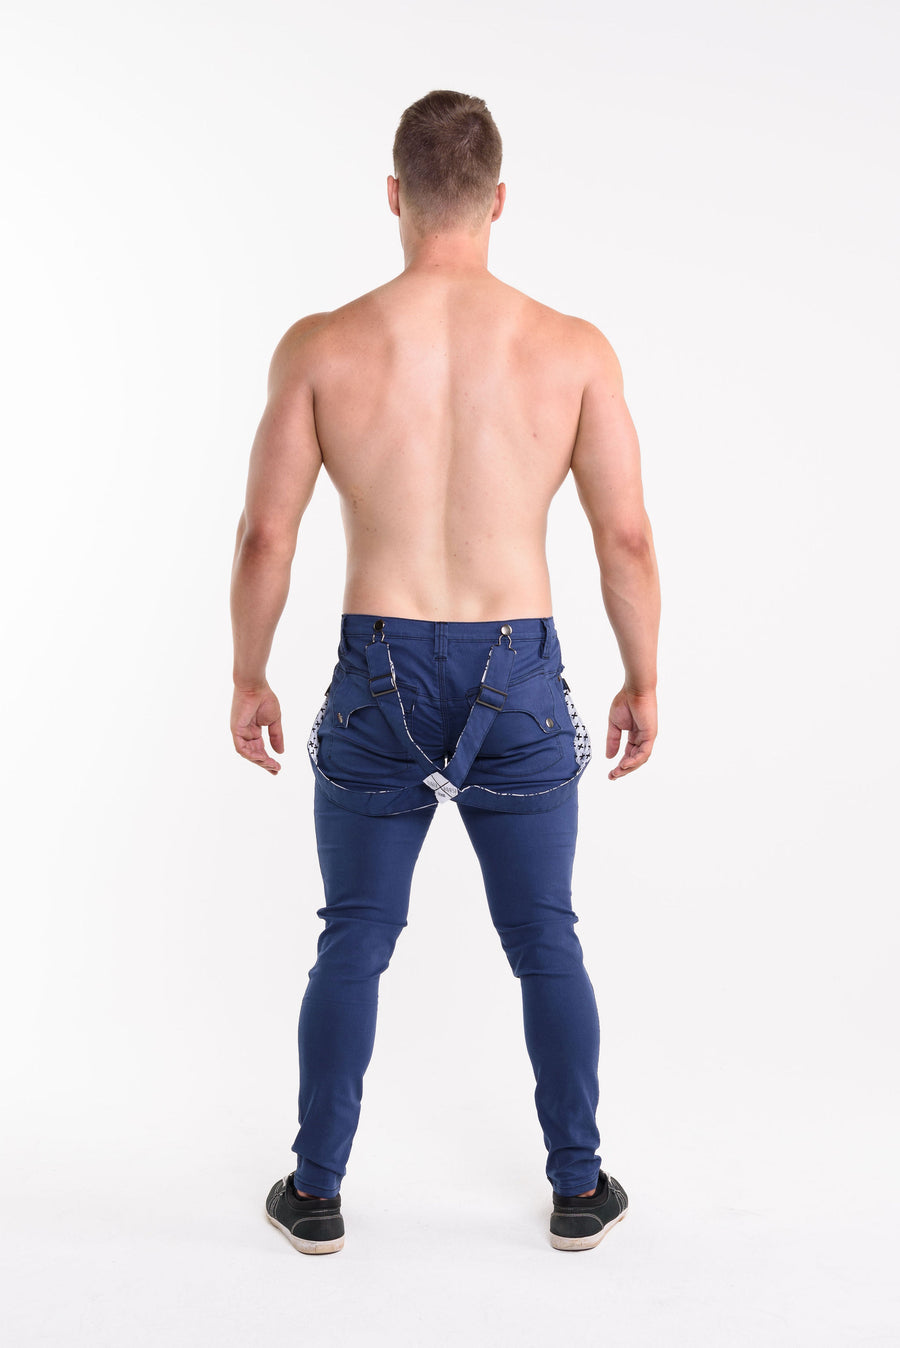 Don The Fuller Men's Denim Pants - Motta Fashion Place